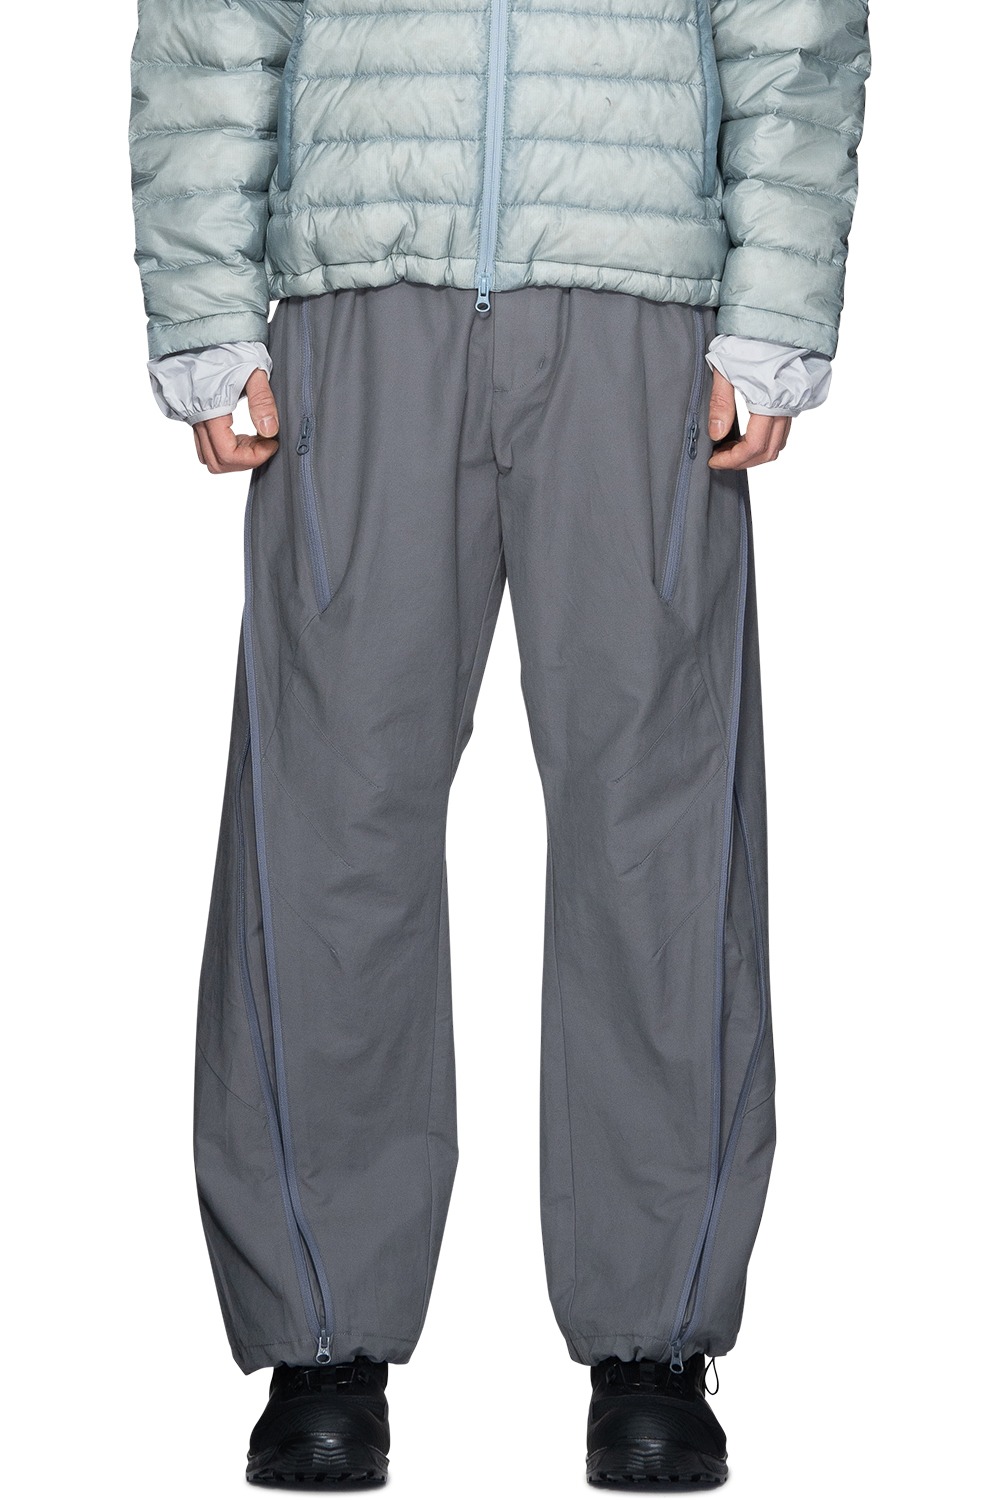 Zipper Pants - Charcoal Grey